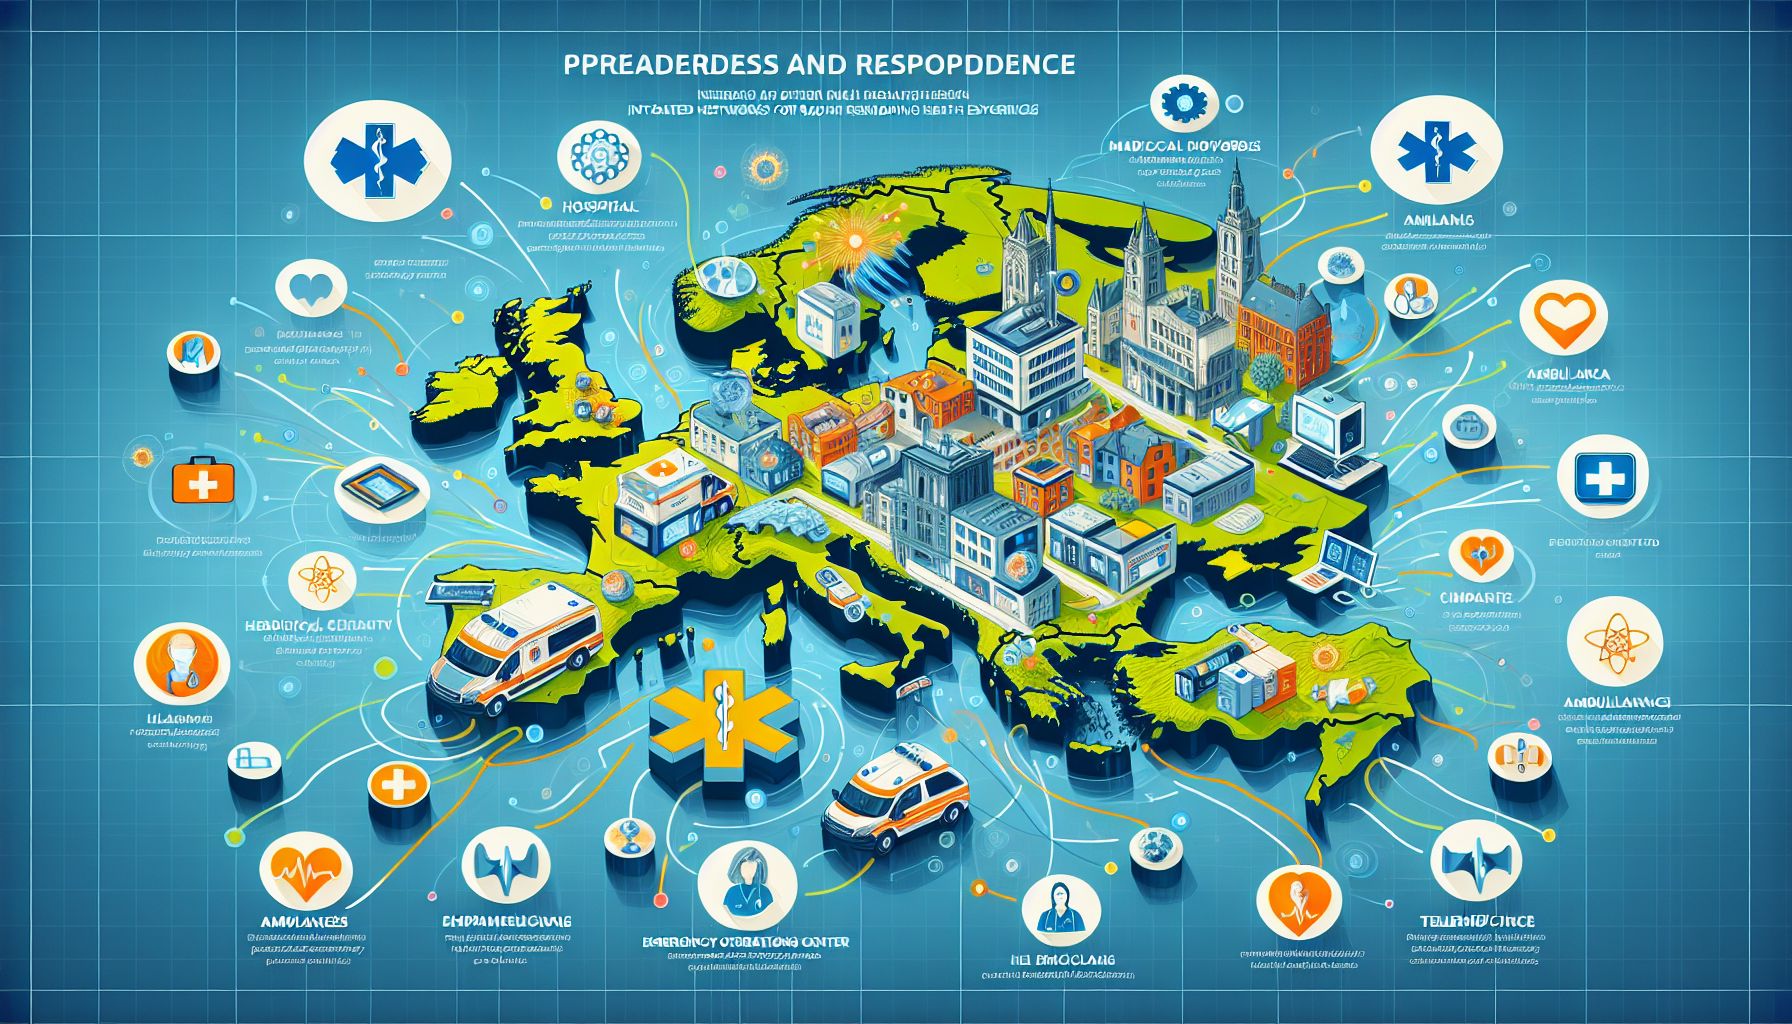 European Health Systems: Preparedness and Response